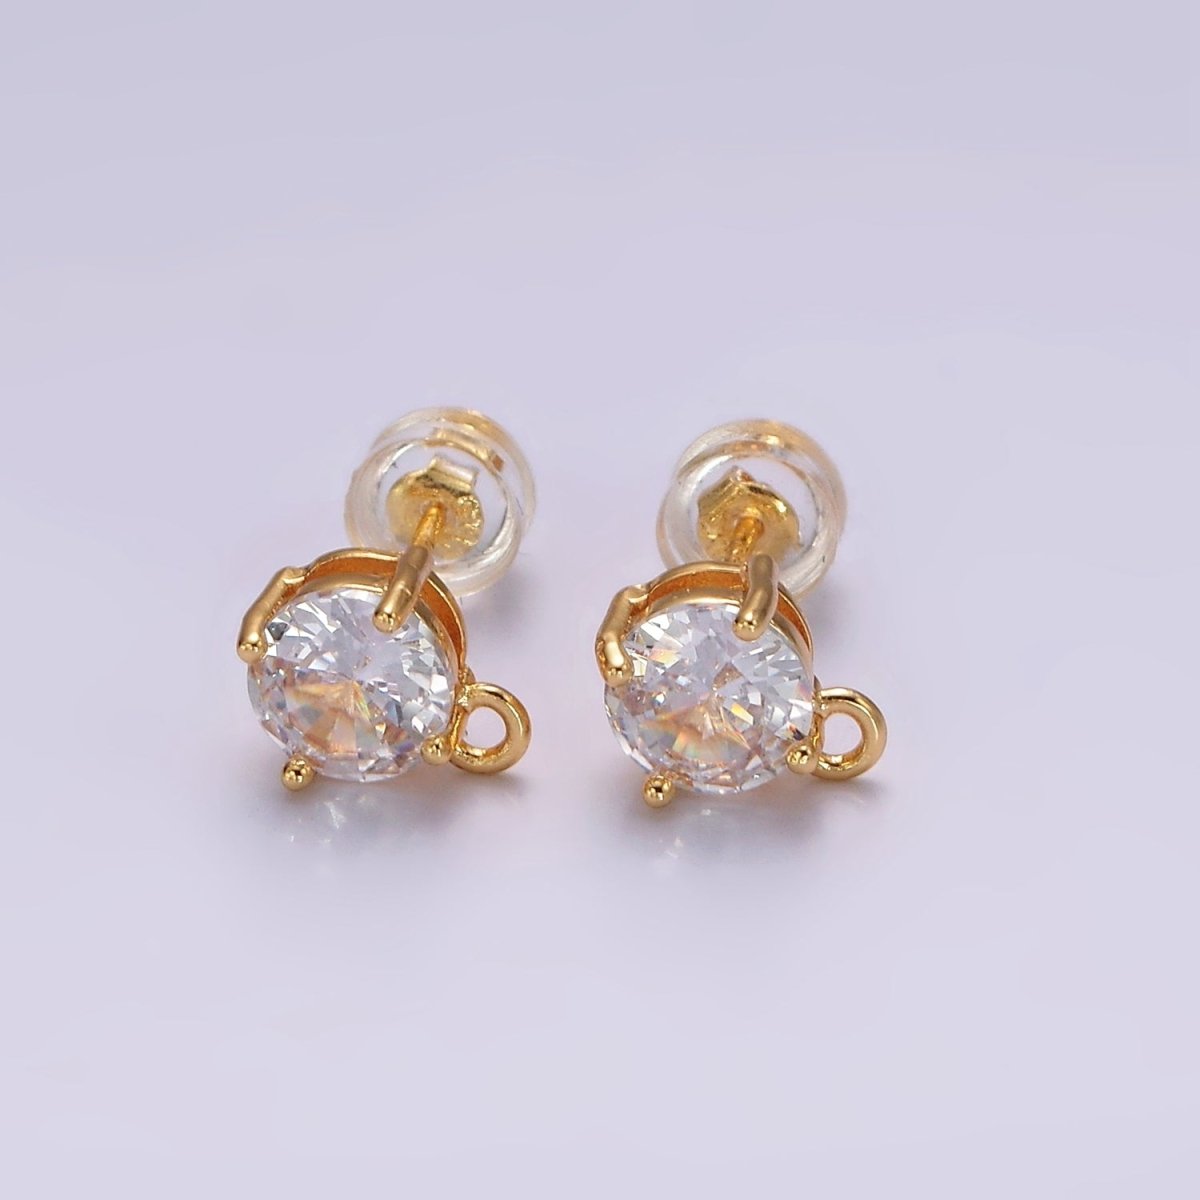 14K Gold Filled Clear, Black, Pink, Green CZ Open Loop Stud Earrings Finding Supply in Gold & Silver | Z626 - Z633 - DLUXCA